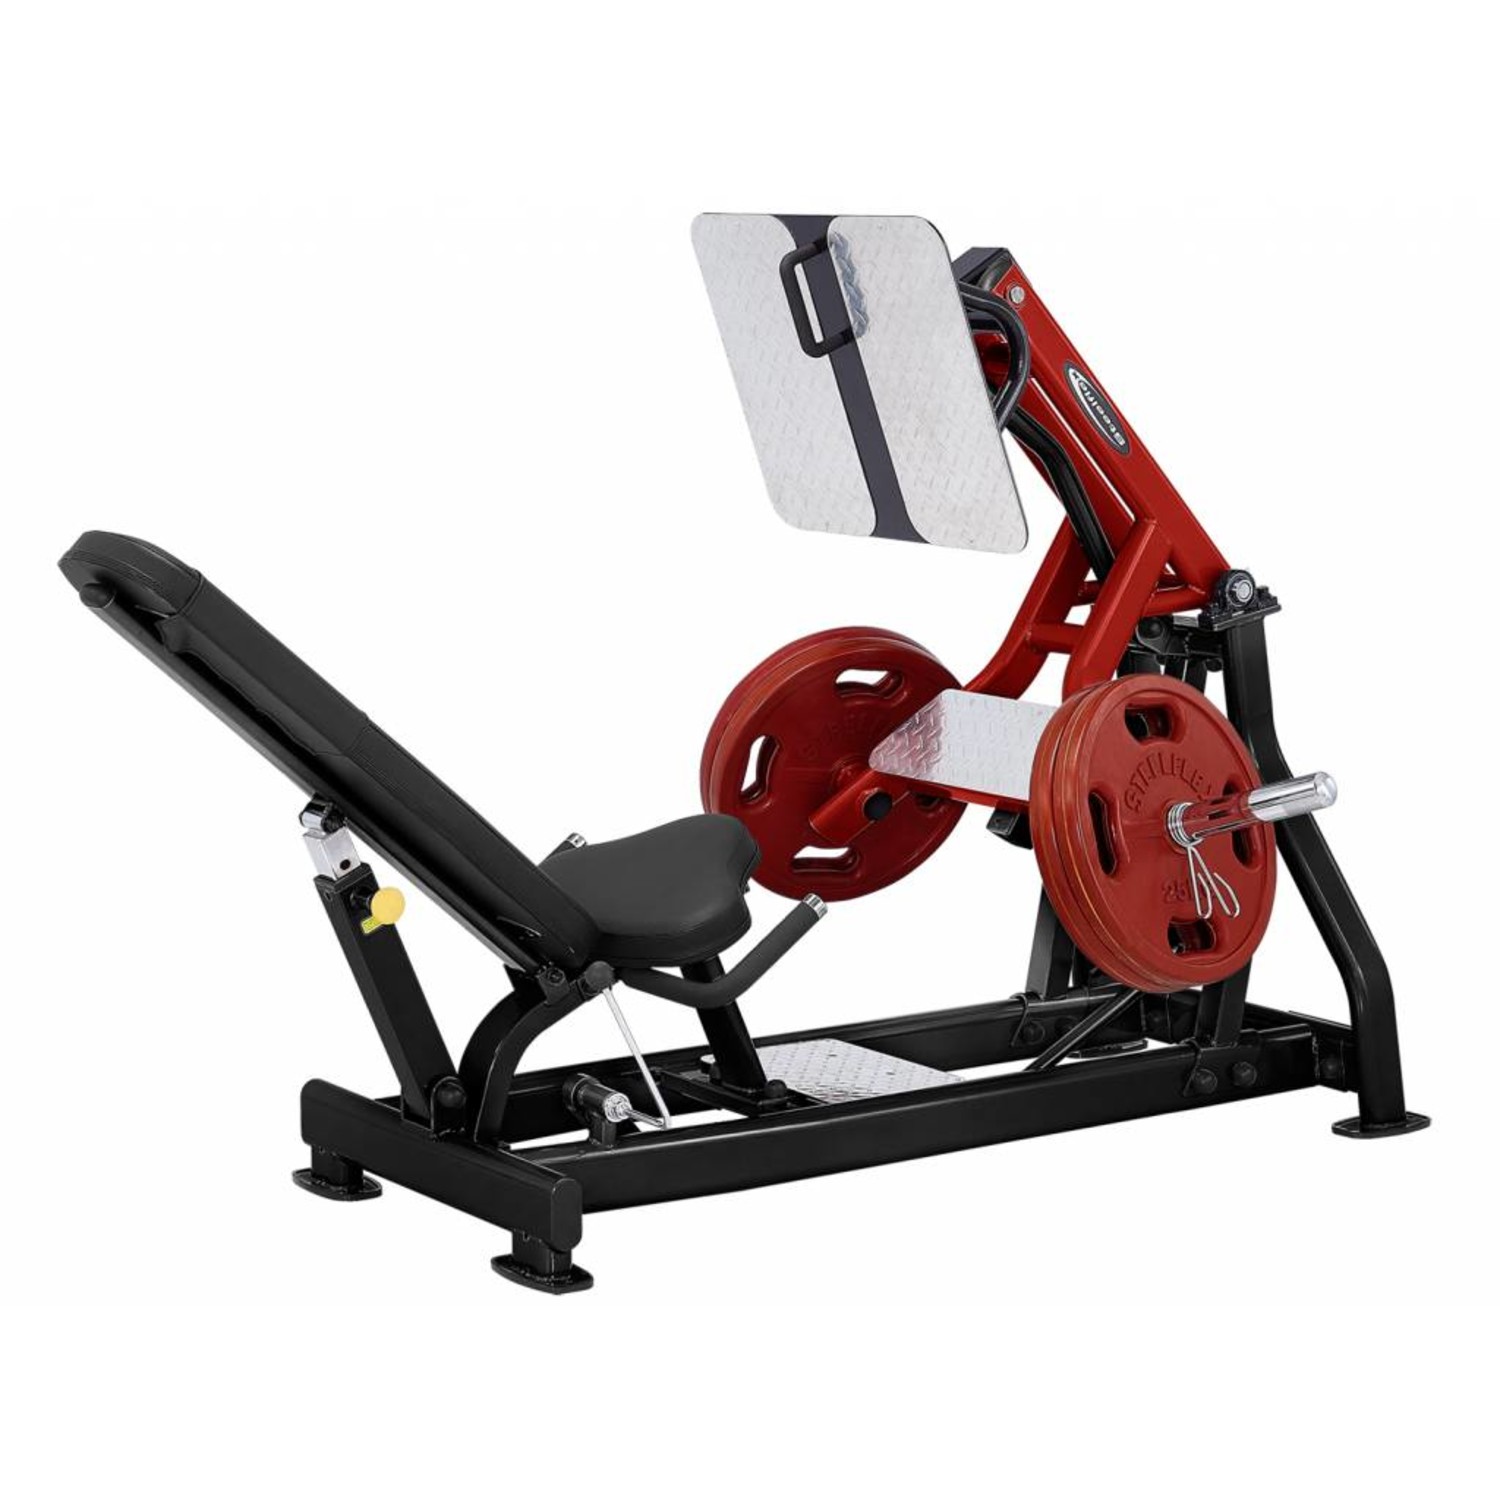 Voorschrijven etiket Vermenigvuldiging Steelflex Plate Loaded Seated Leg Press Machine - Fitnesskoerier.nl